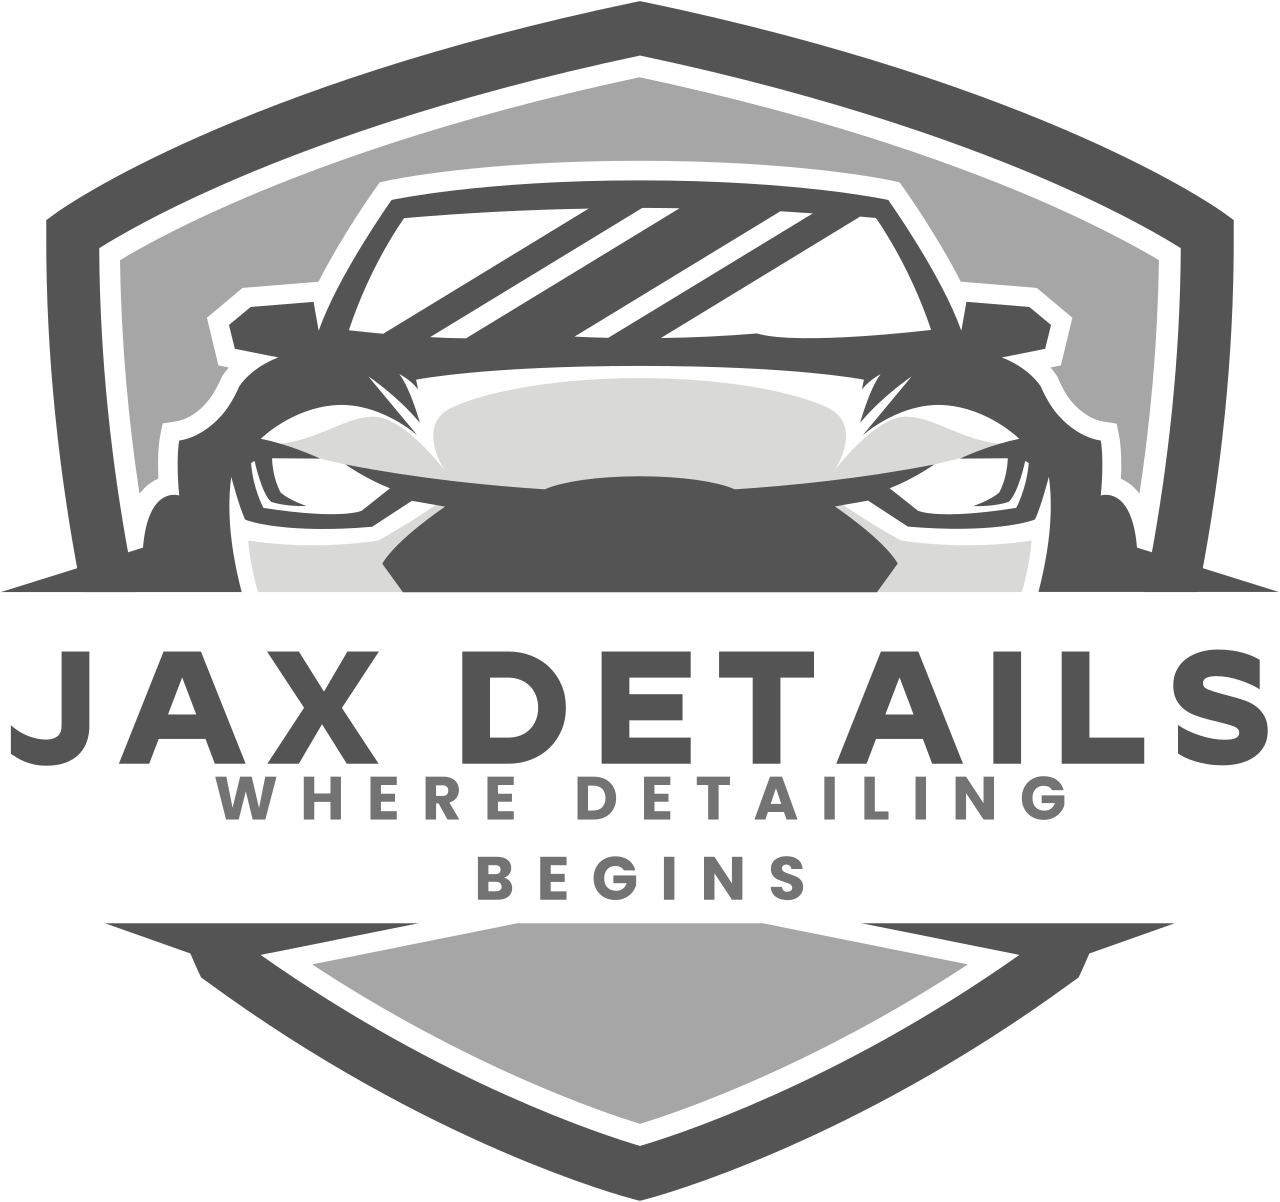 Jax Details's logo